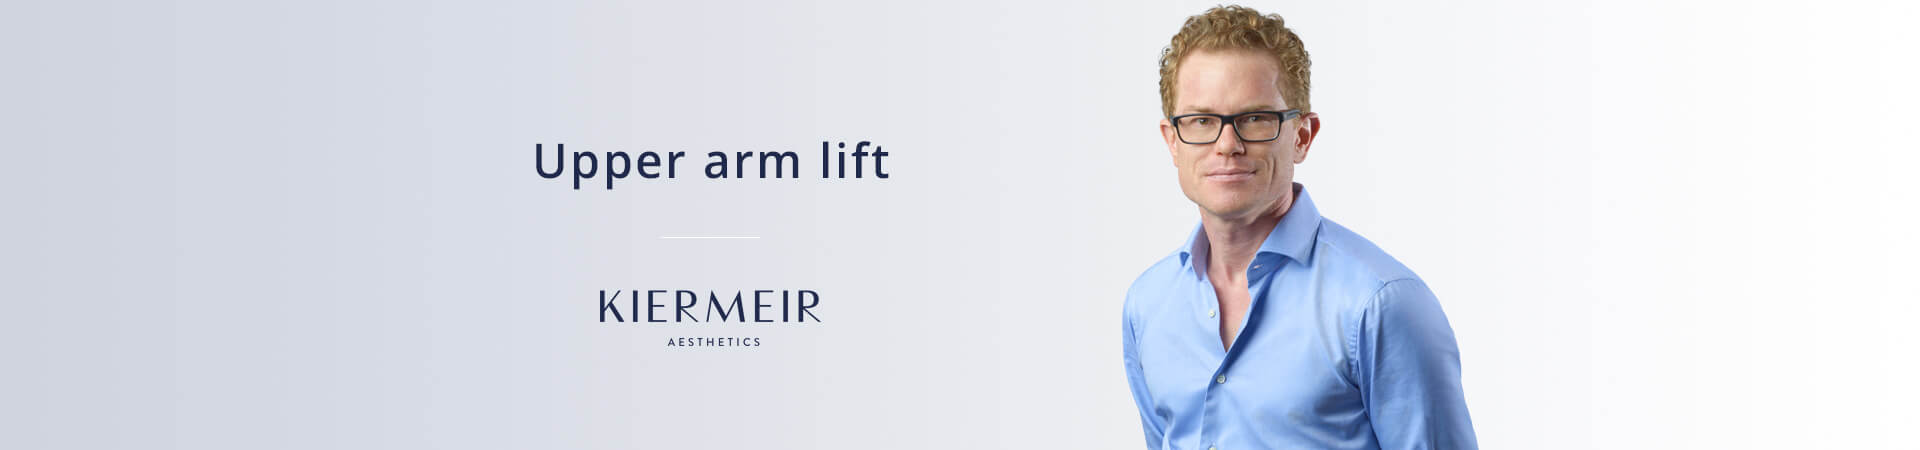 Upper Arm Lift in Bern by Dr. Kiermeir 